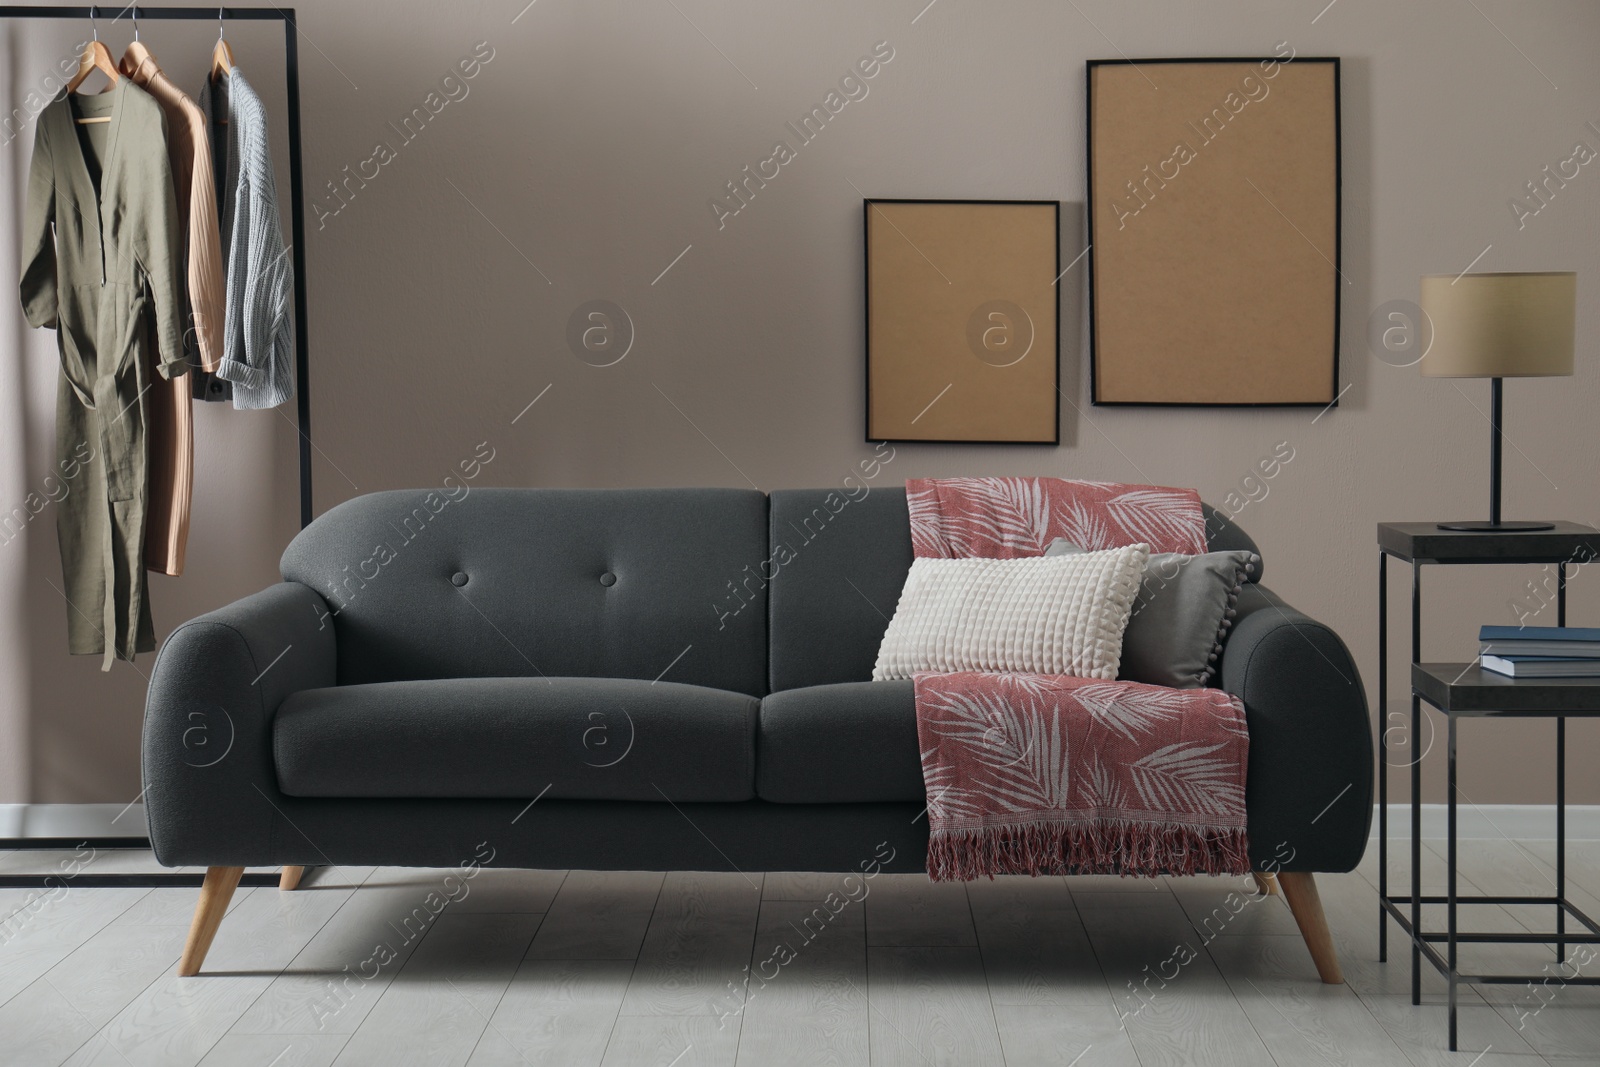 Photo of Living room interior with stylish comfortable sofa